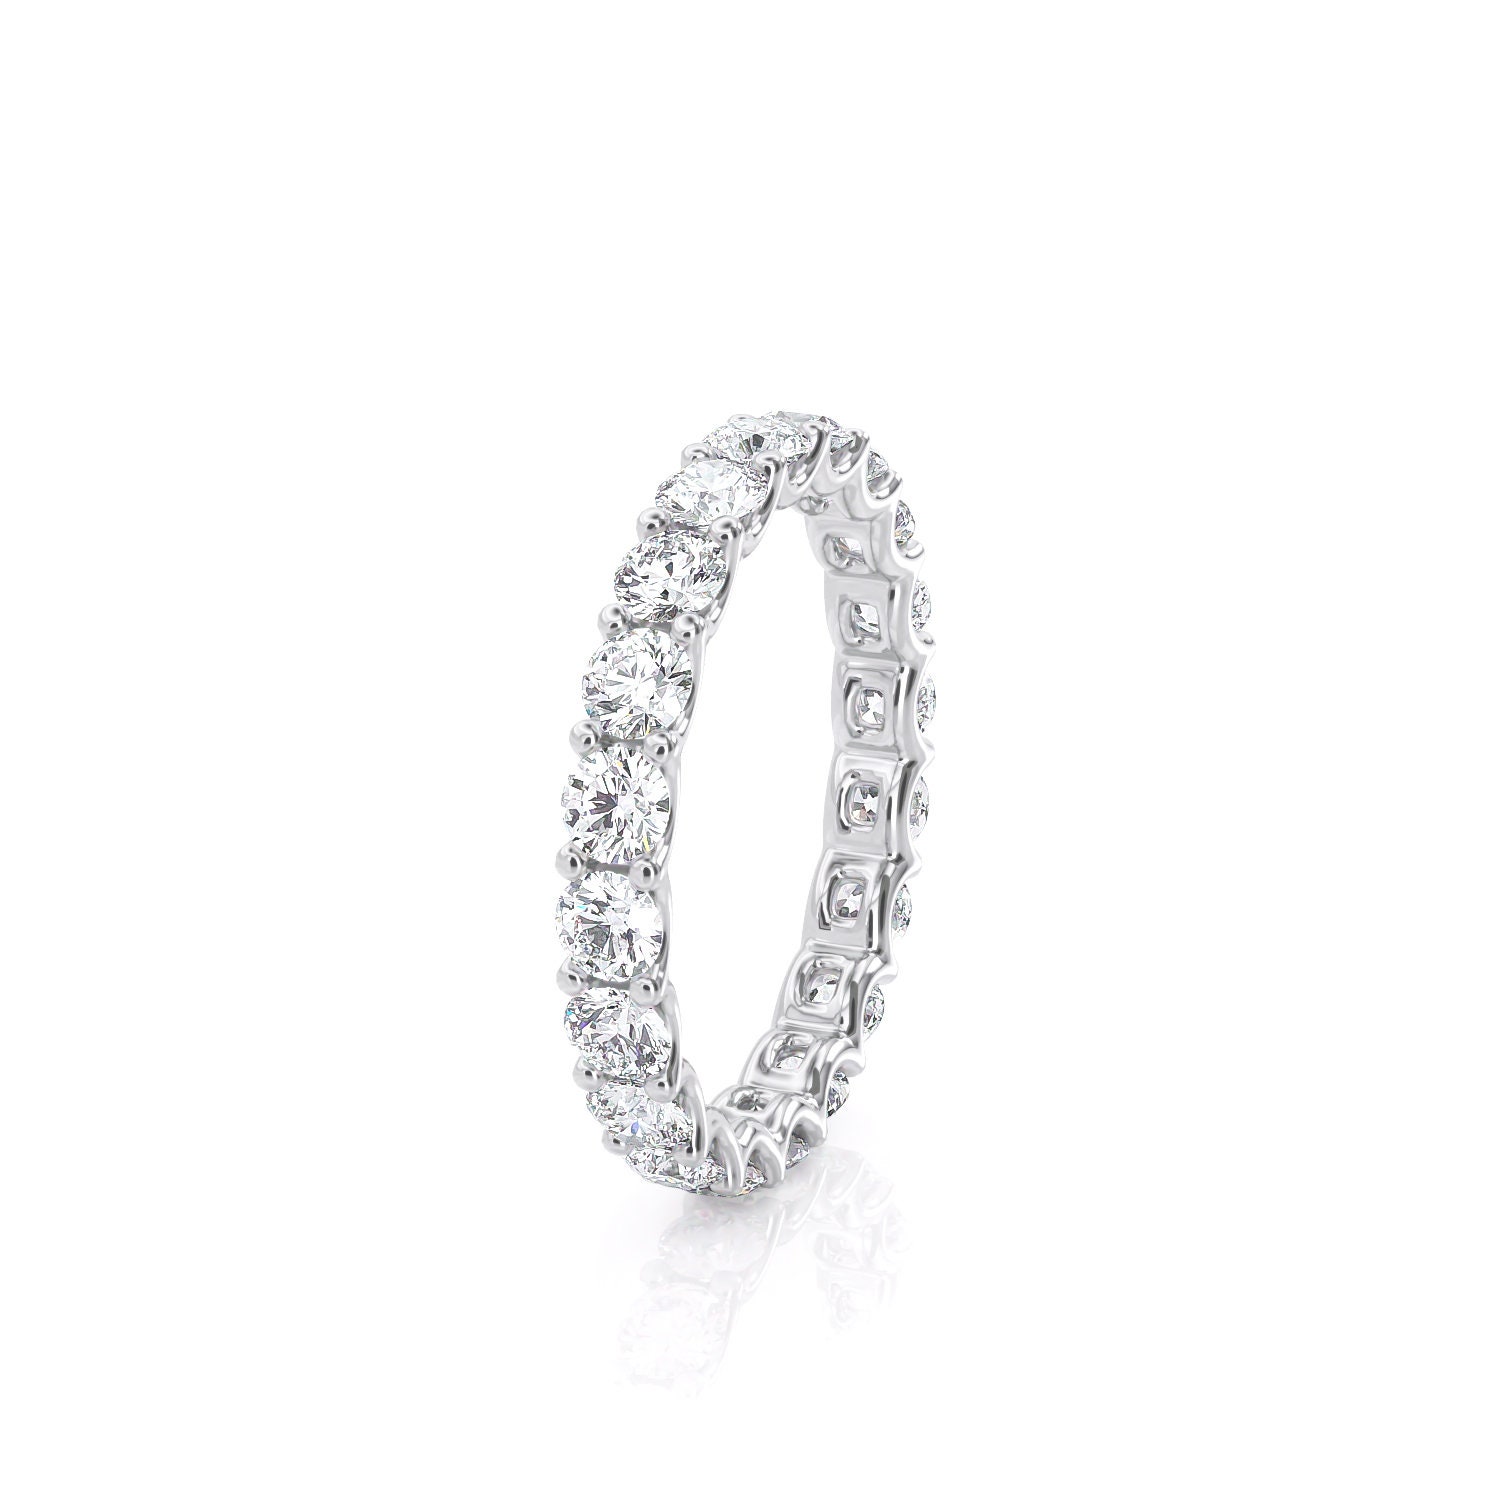 3mm U Shaped Diamond Ring. Eternity Wedding Band in White Gold | Etsy